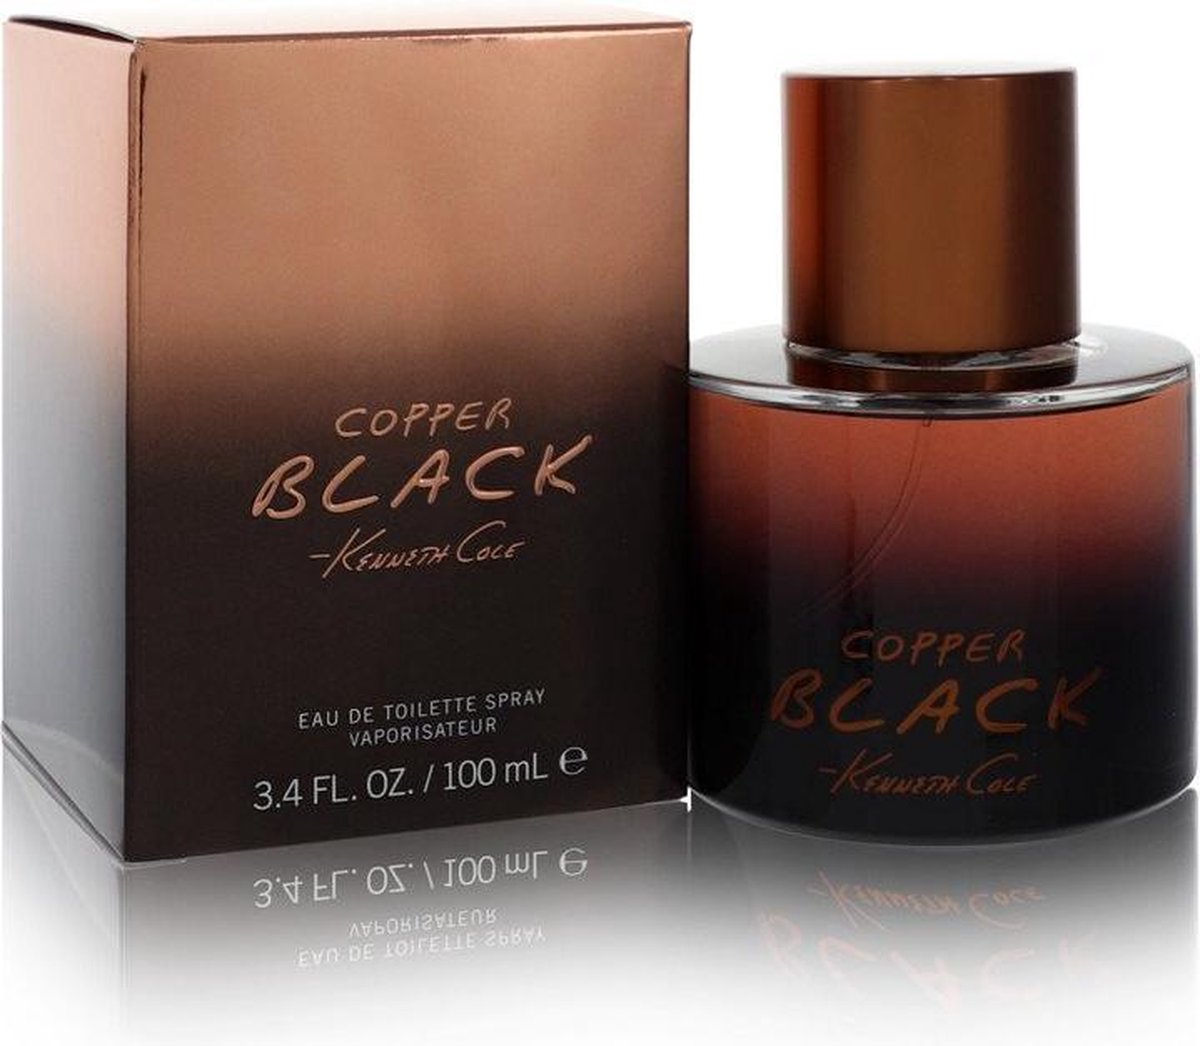 Kenneth Cole Copper Black by Kenneth Cole 100 ml - Eau De Toilette Spray